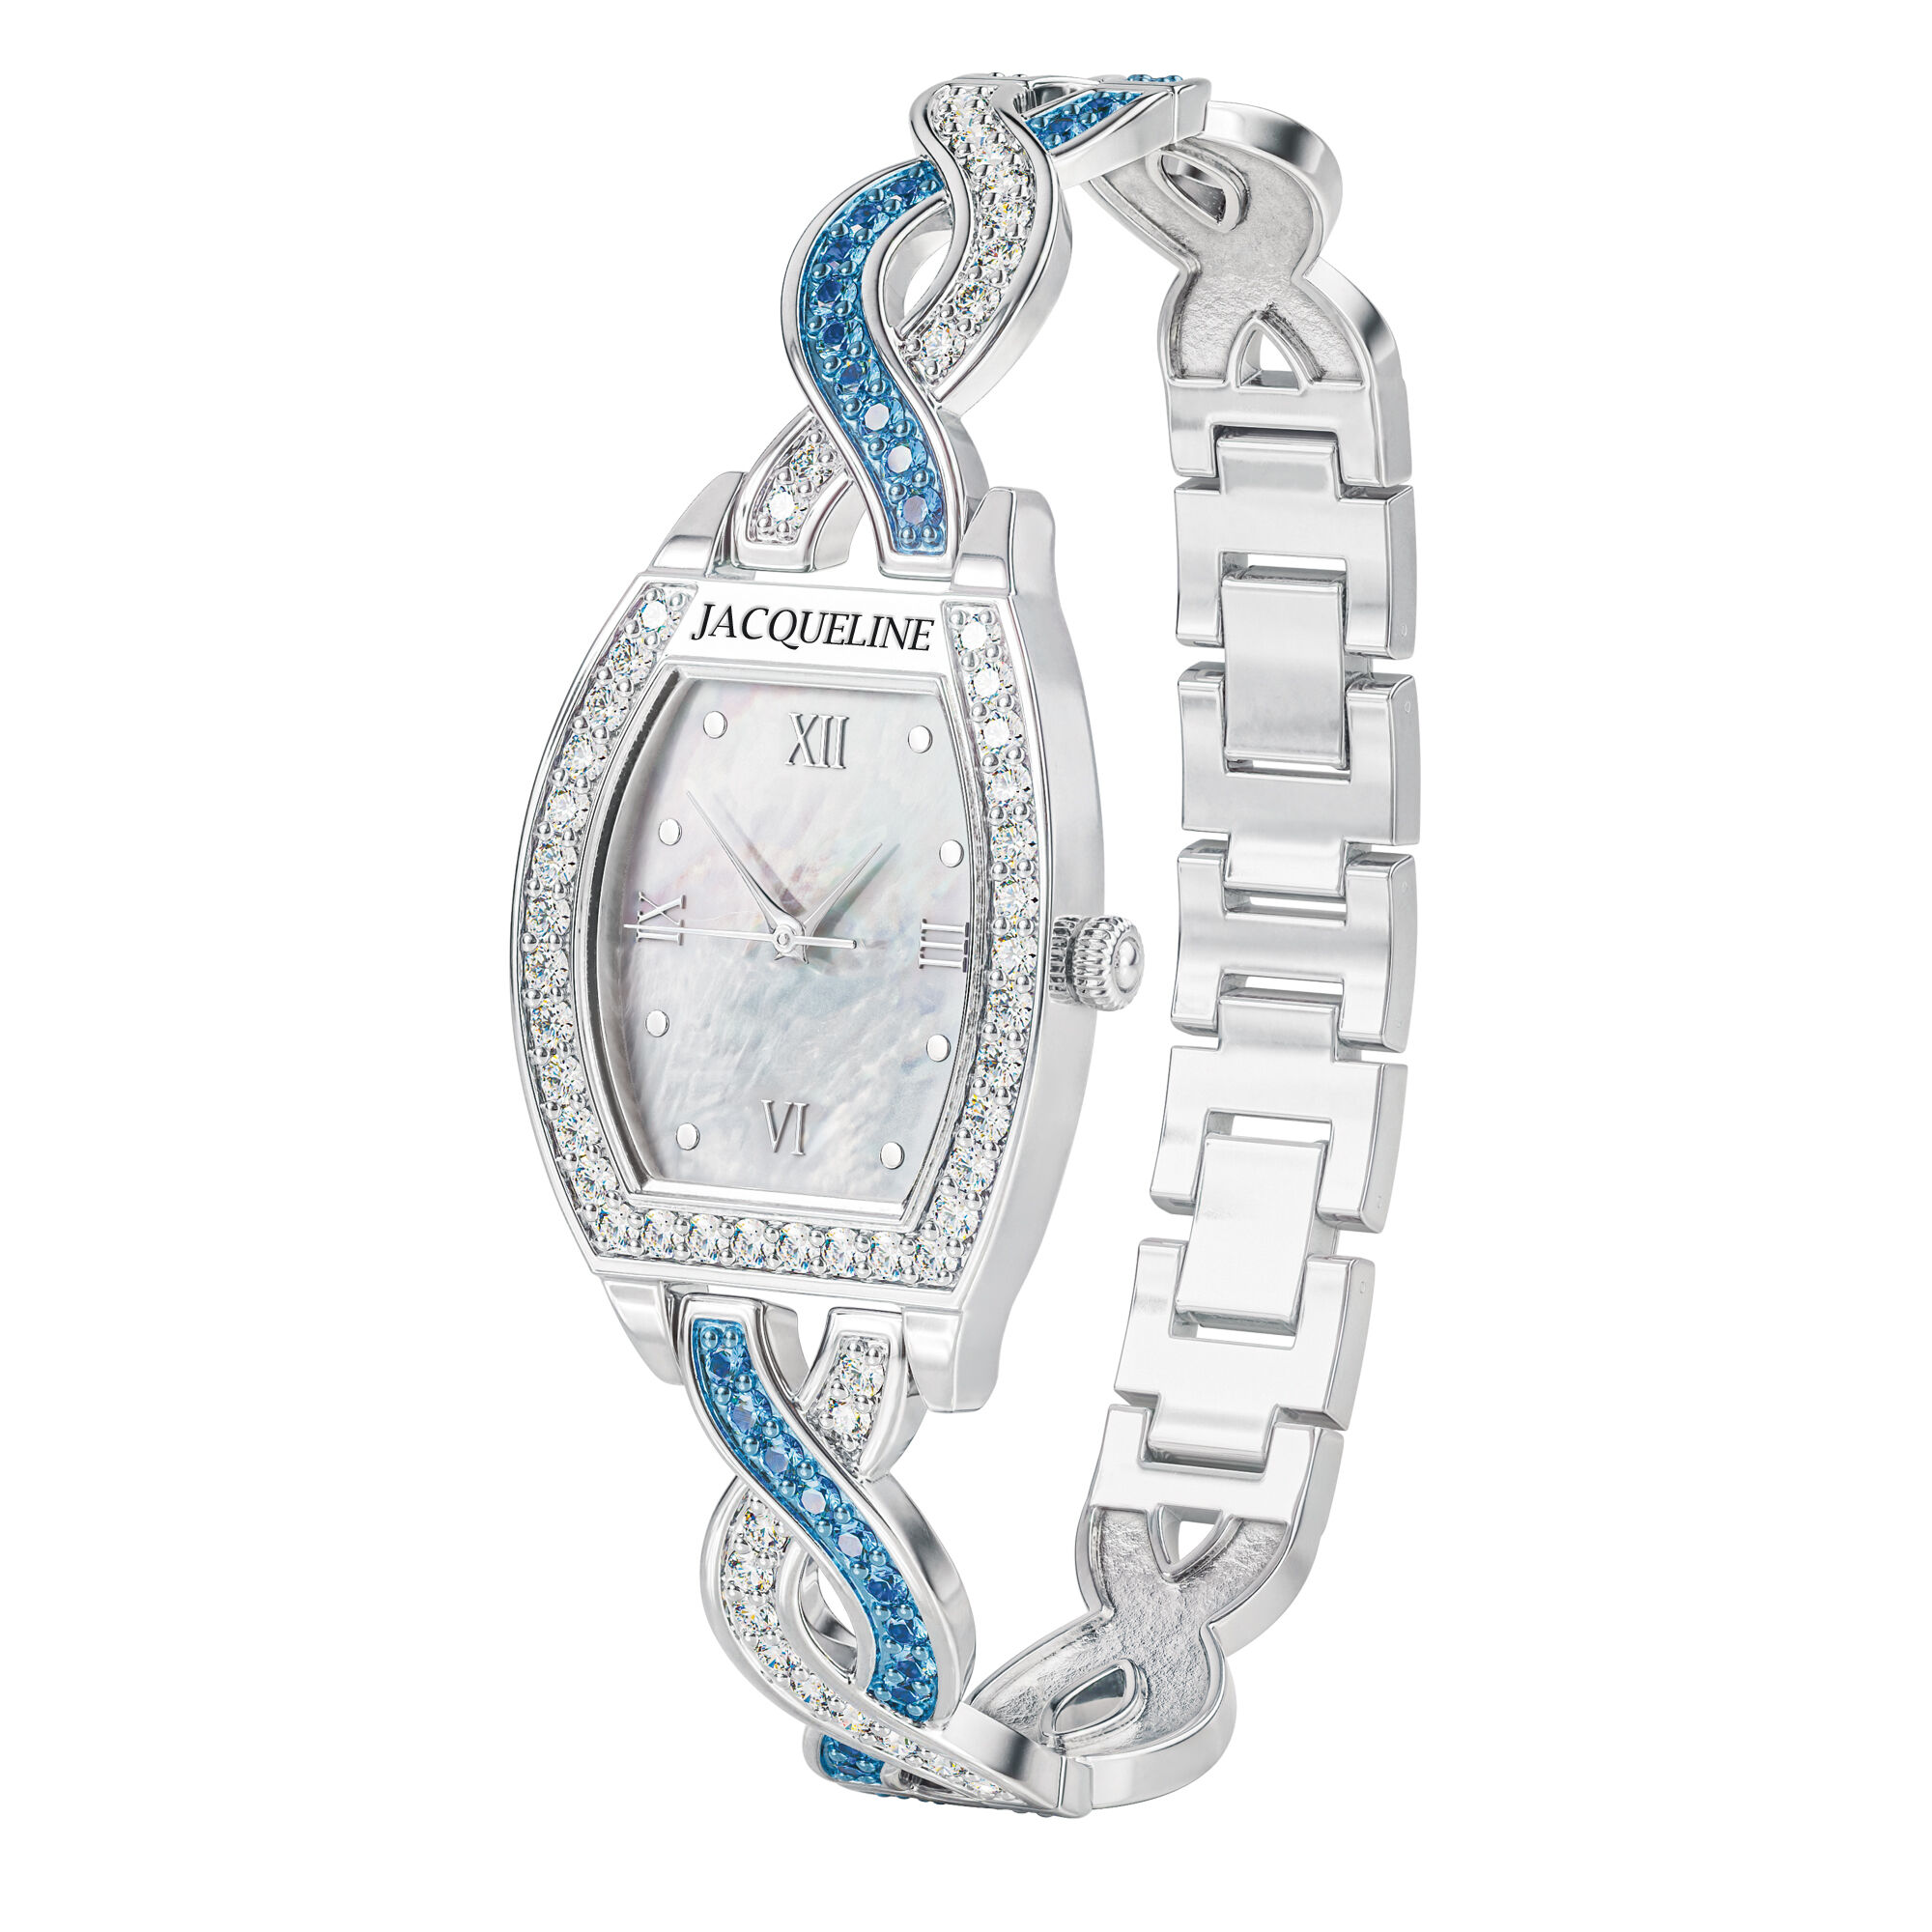 Birthstone Bracelet Watch 10148 0010 l december